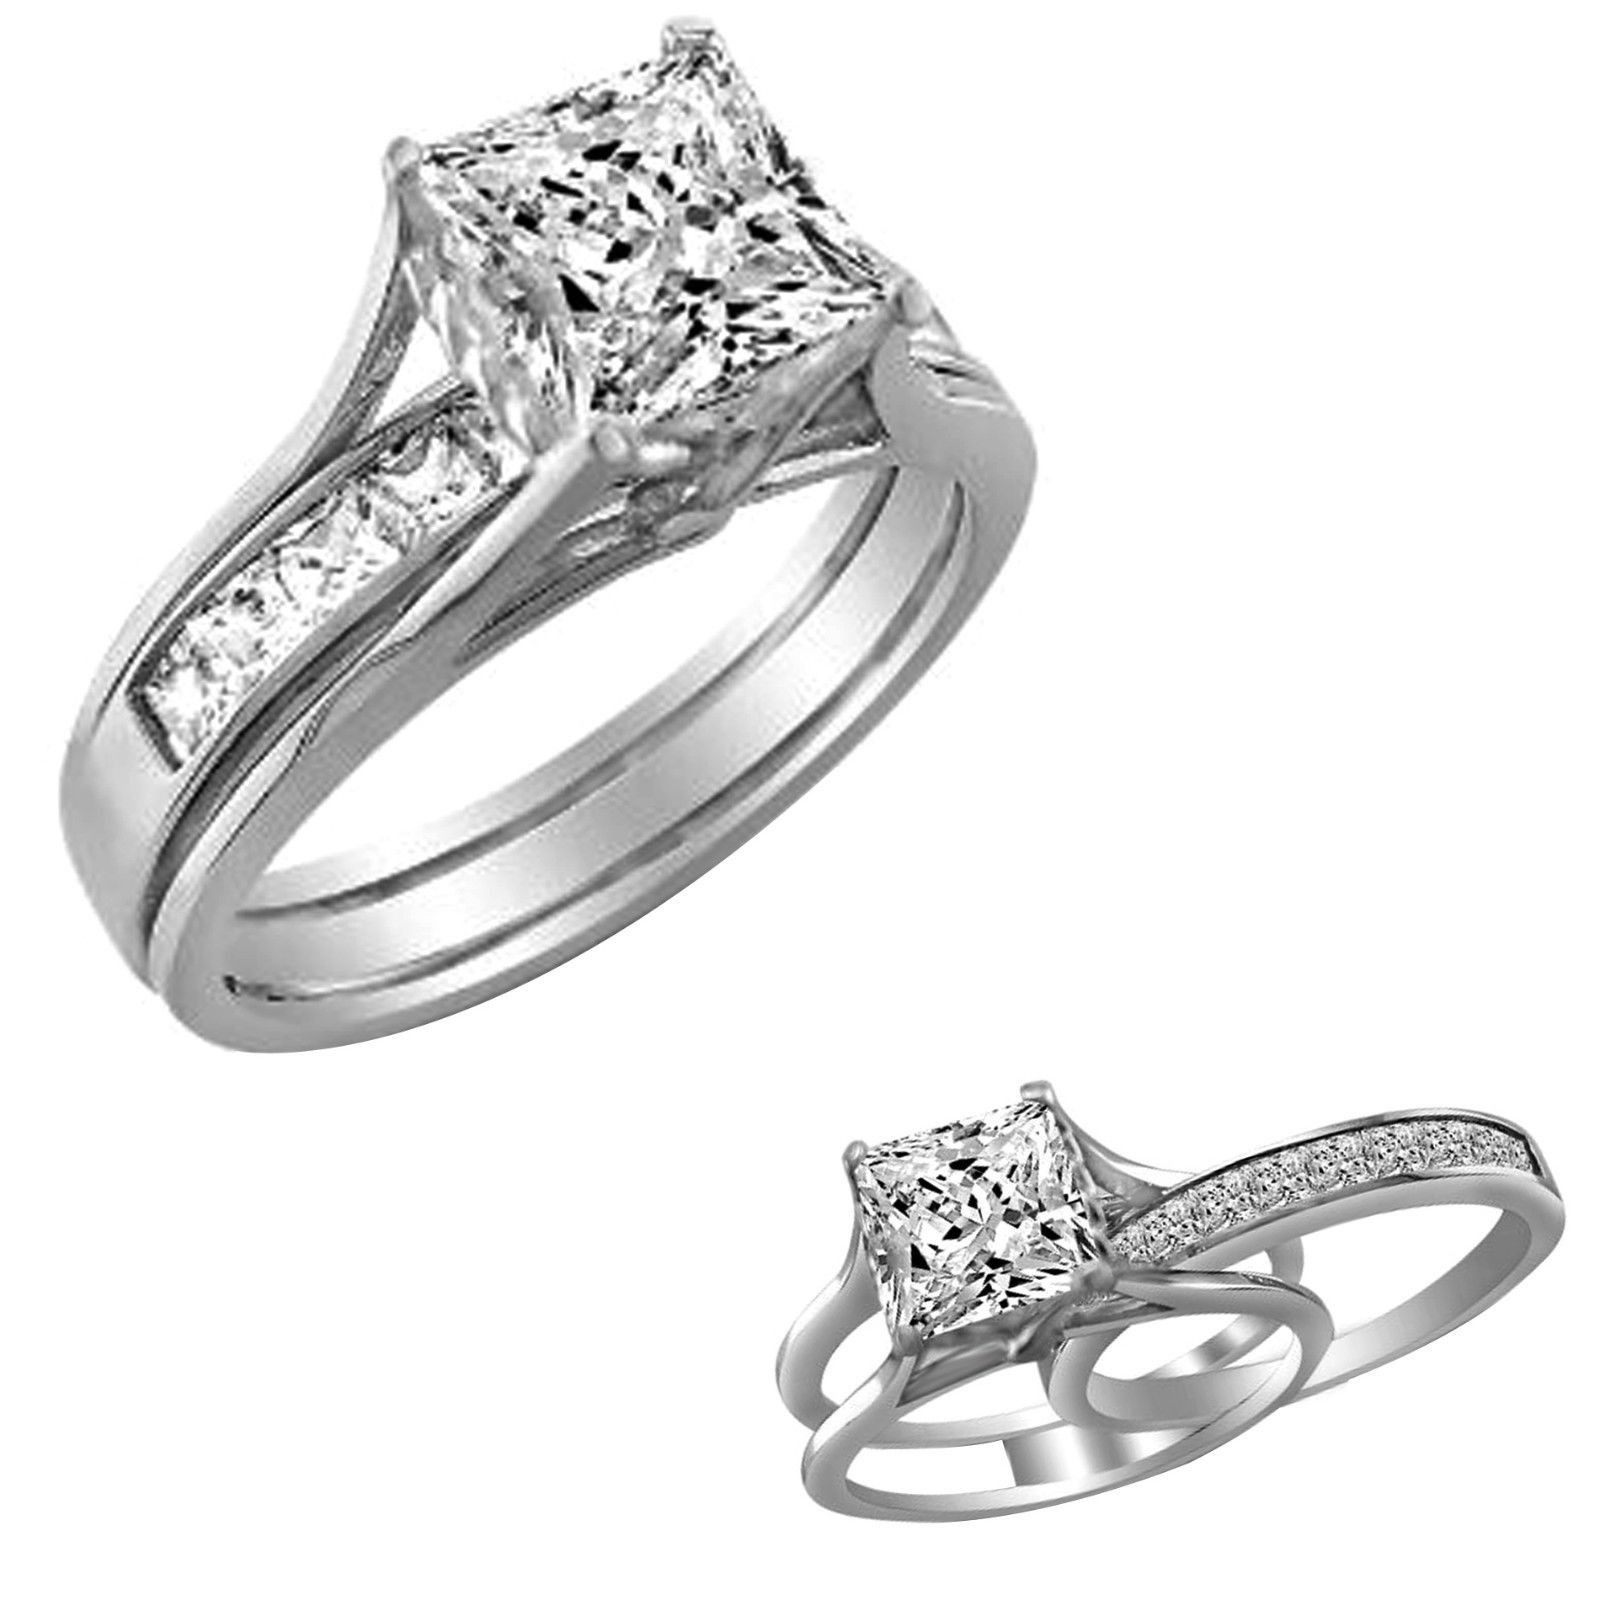 2ct Princess Cut Engagement Rings
 2 Ct Princess Cut 2 Piece Engagement Wedding Ring Band Set